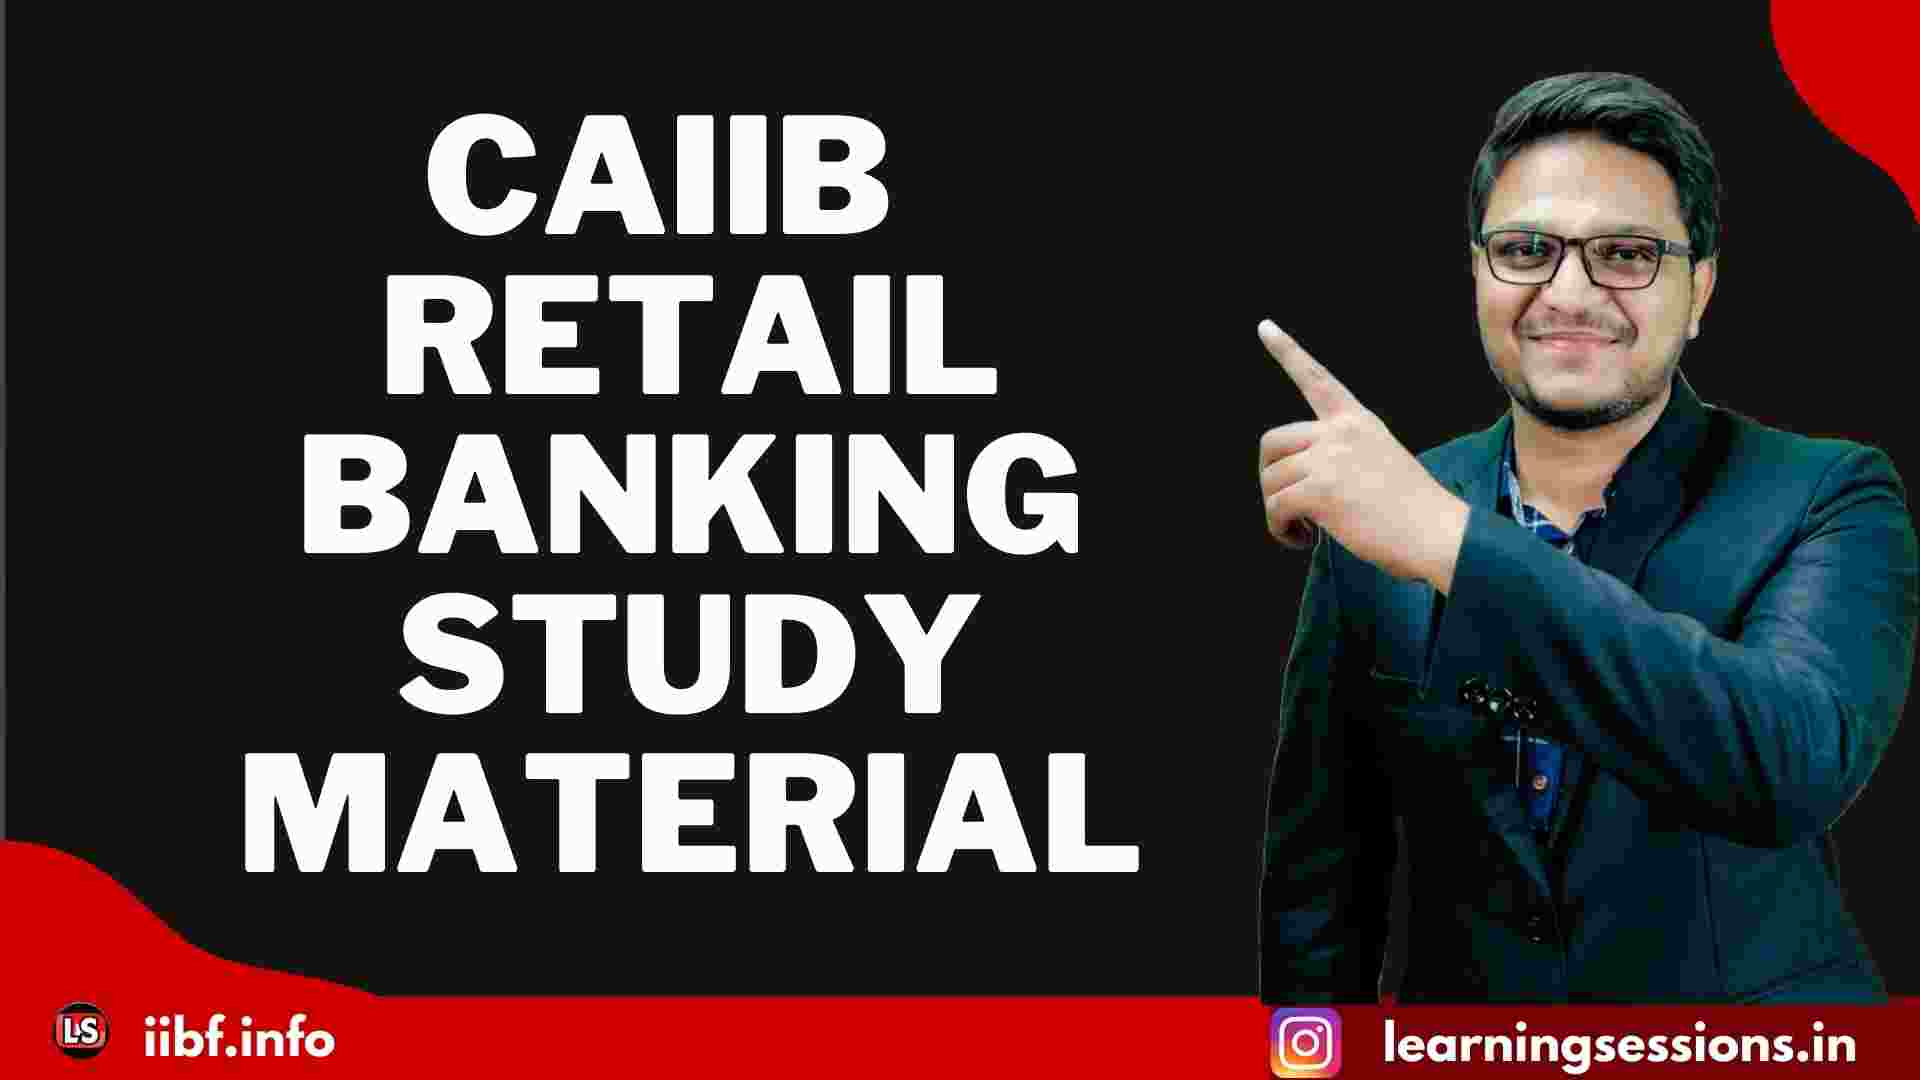 IIBF CAIIB RETAIL BANKING STUDY MATERIAL 2022